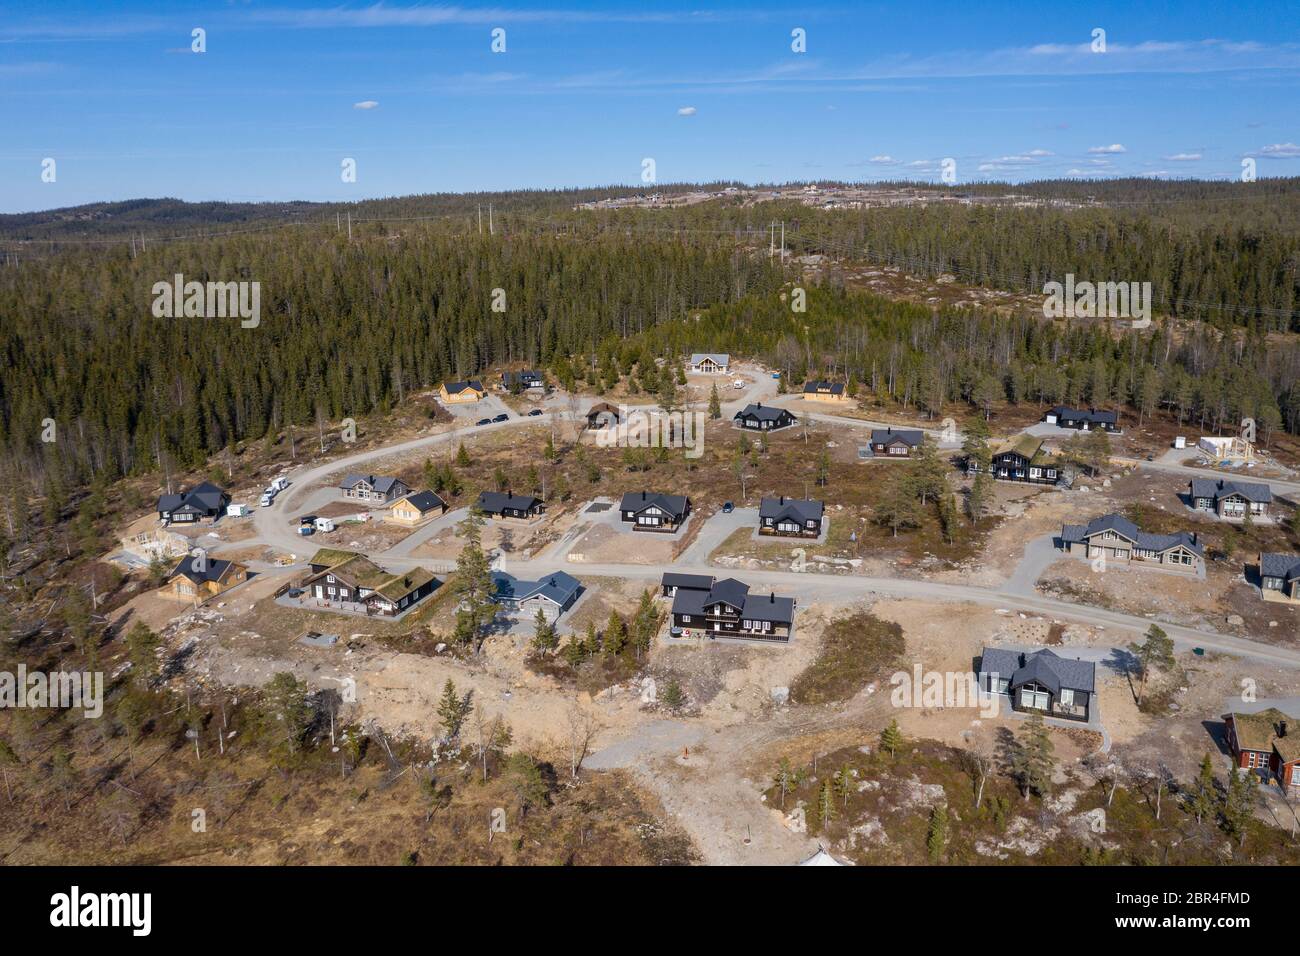 Aerial photo of modern cabin development at Lygna Skisenter, Jaren, 1 hr drive from Oslo Stock Photo